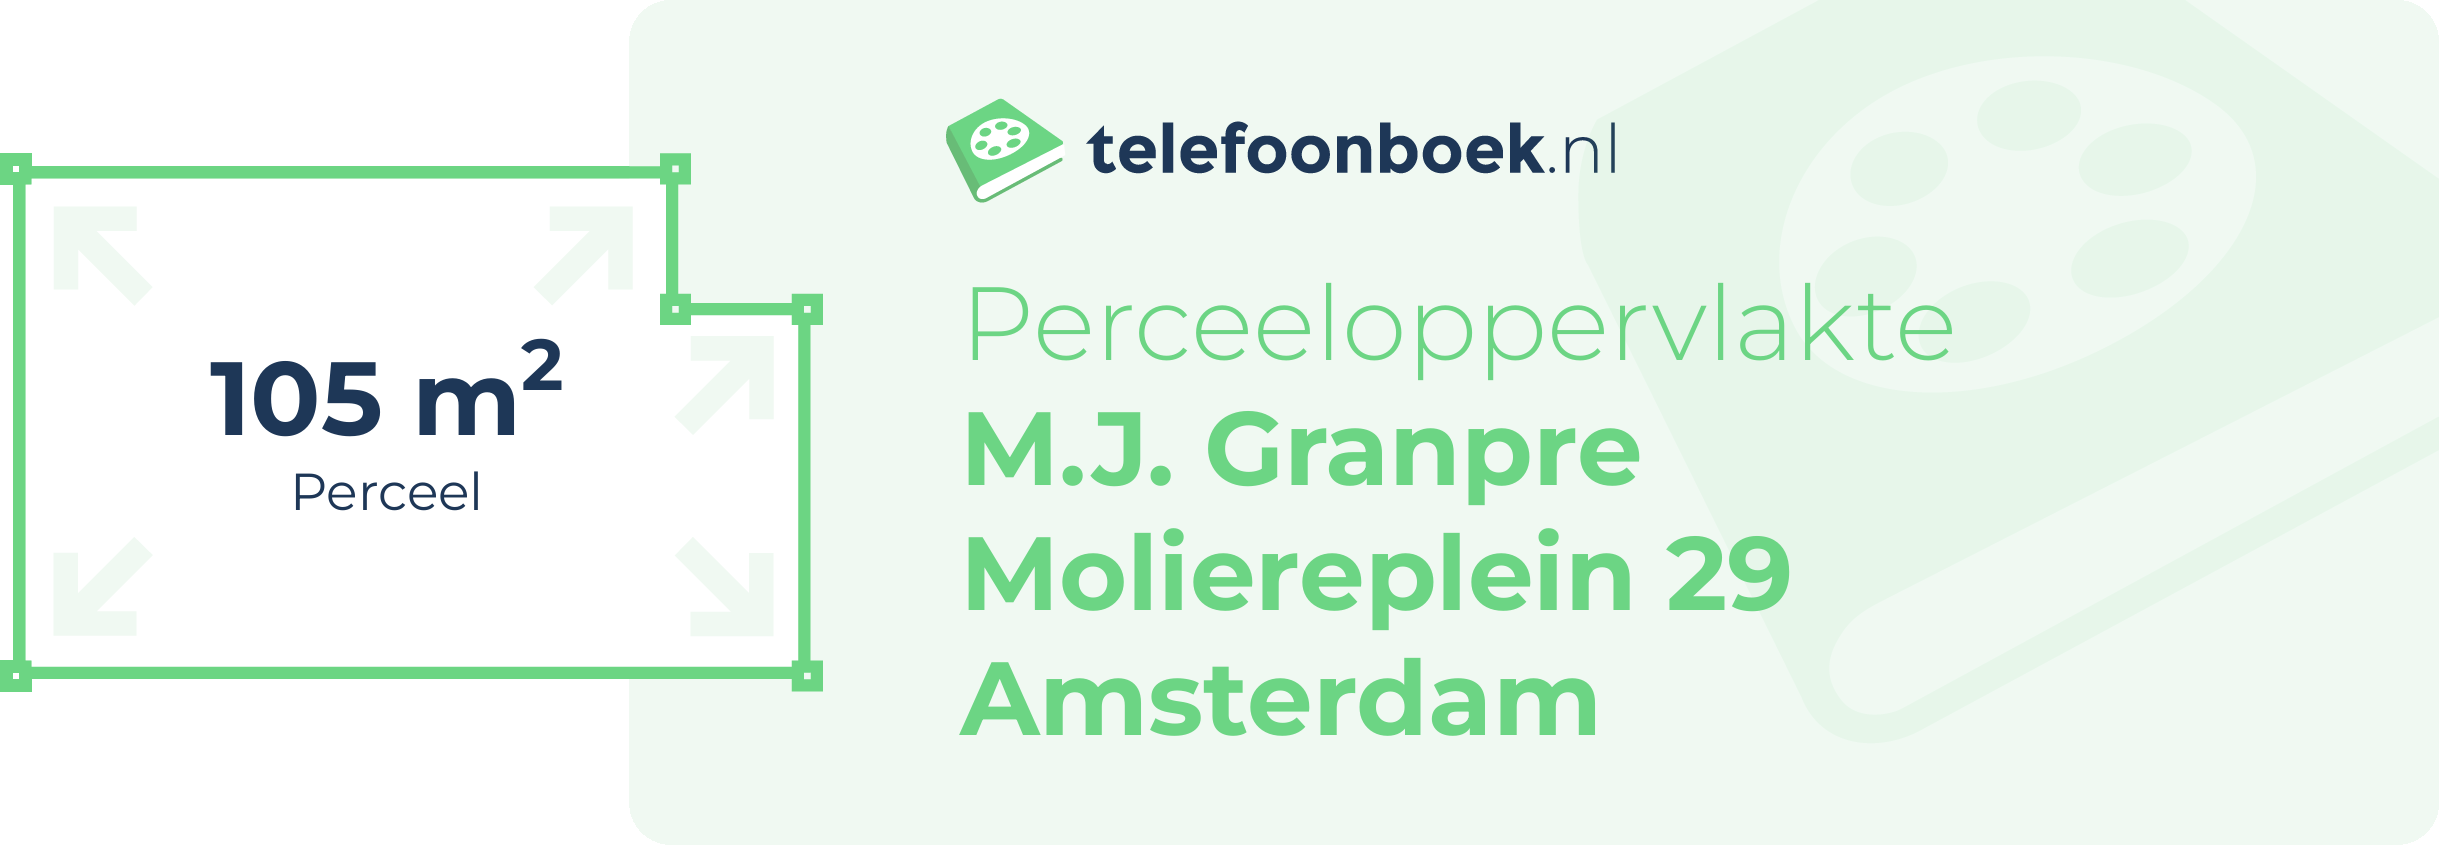 Perceeloppervlakte M.J. Granpre Moliereplein 29 Amsterdam